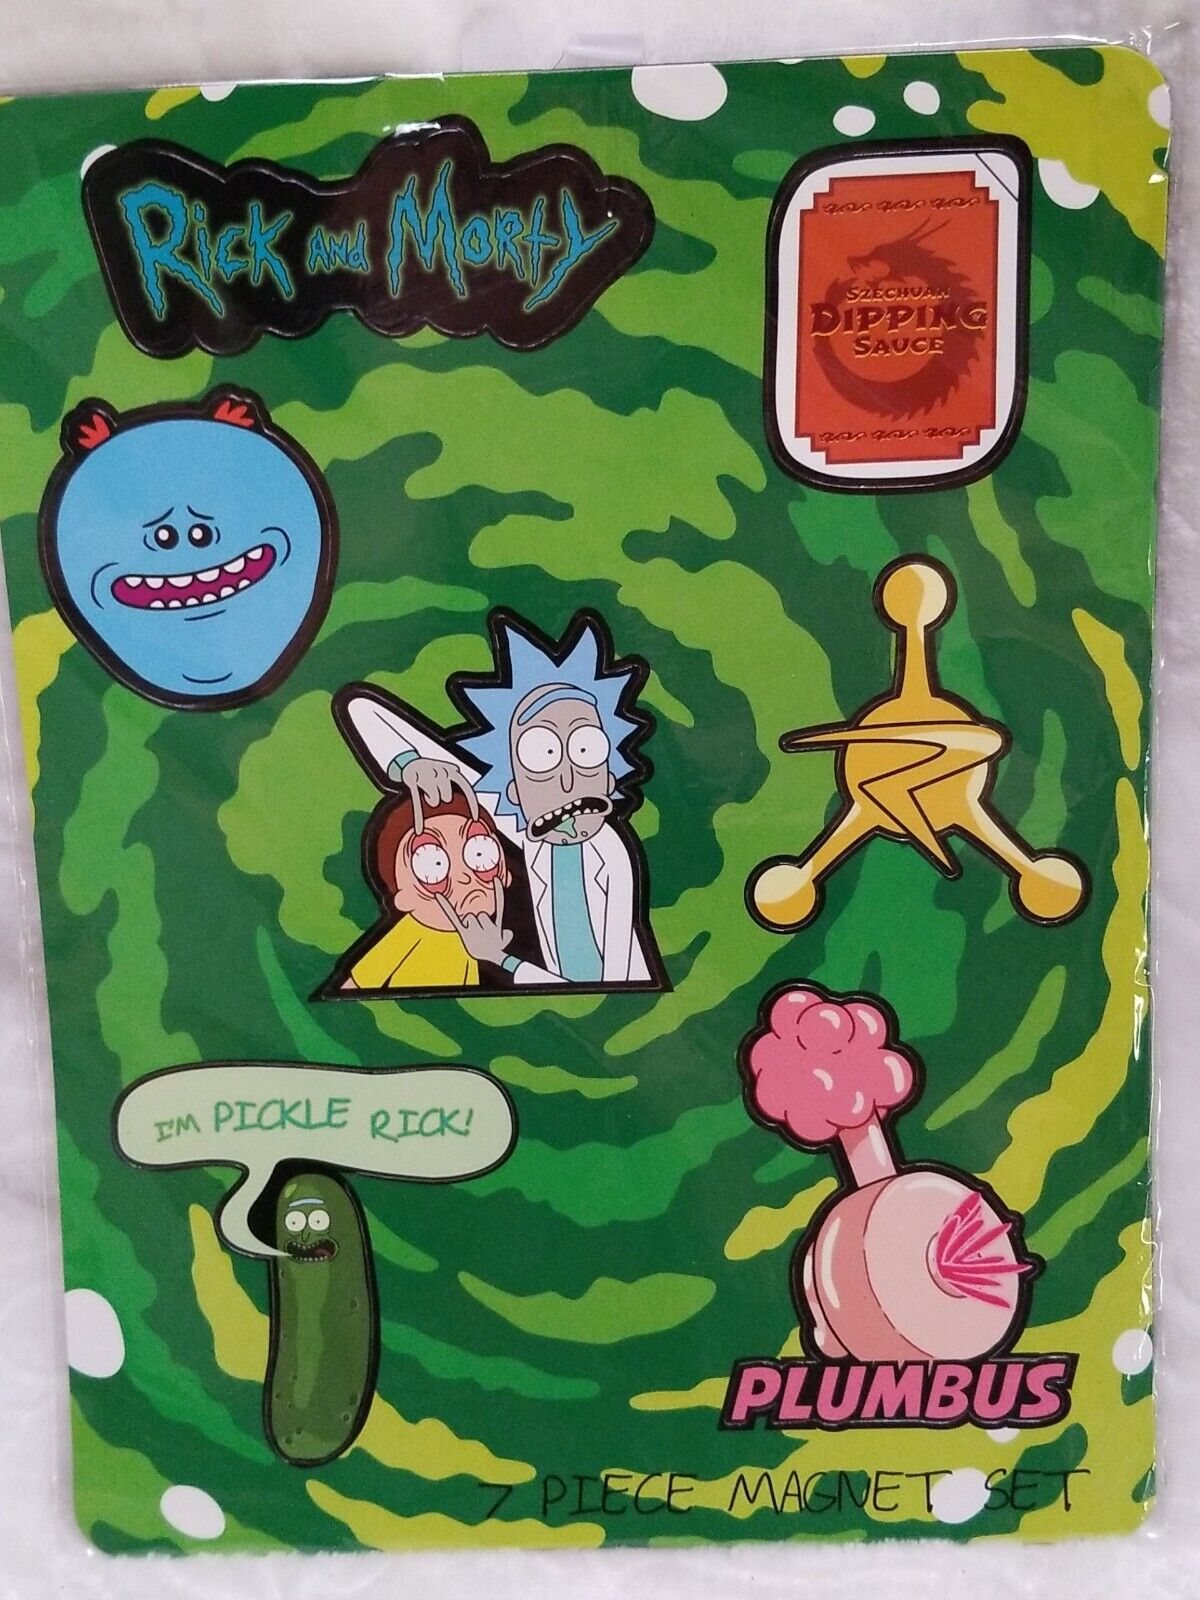 Rick and Morty 7 Piece Magnet Set [Pickle Rick, Mr. Meeseeks, Plumbus, Szechuan]